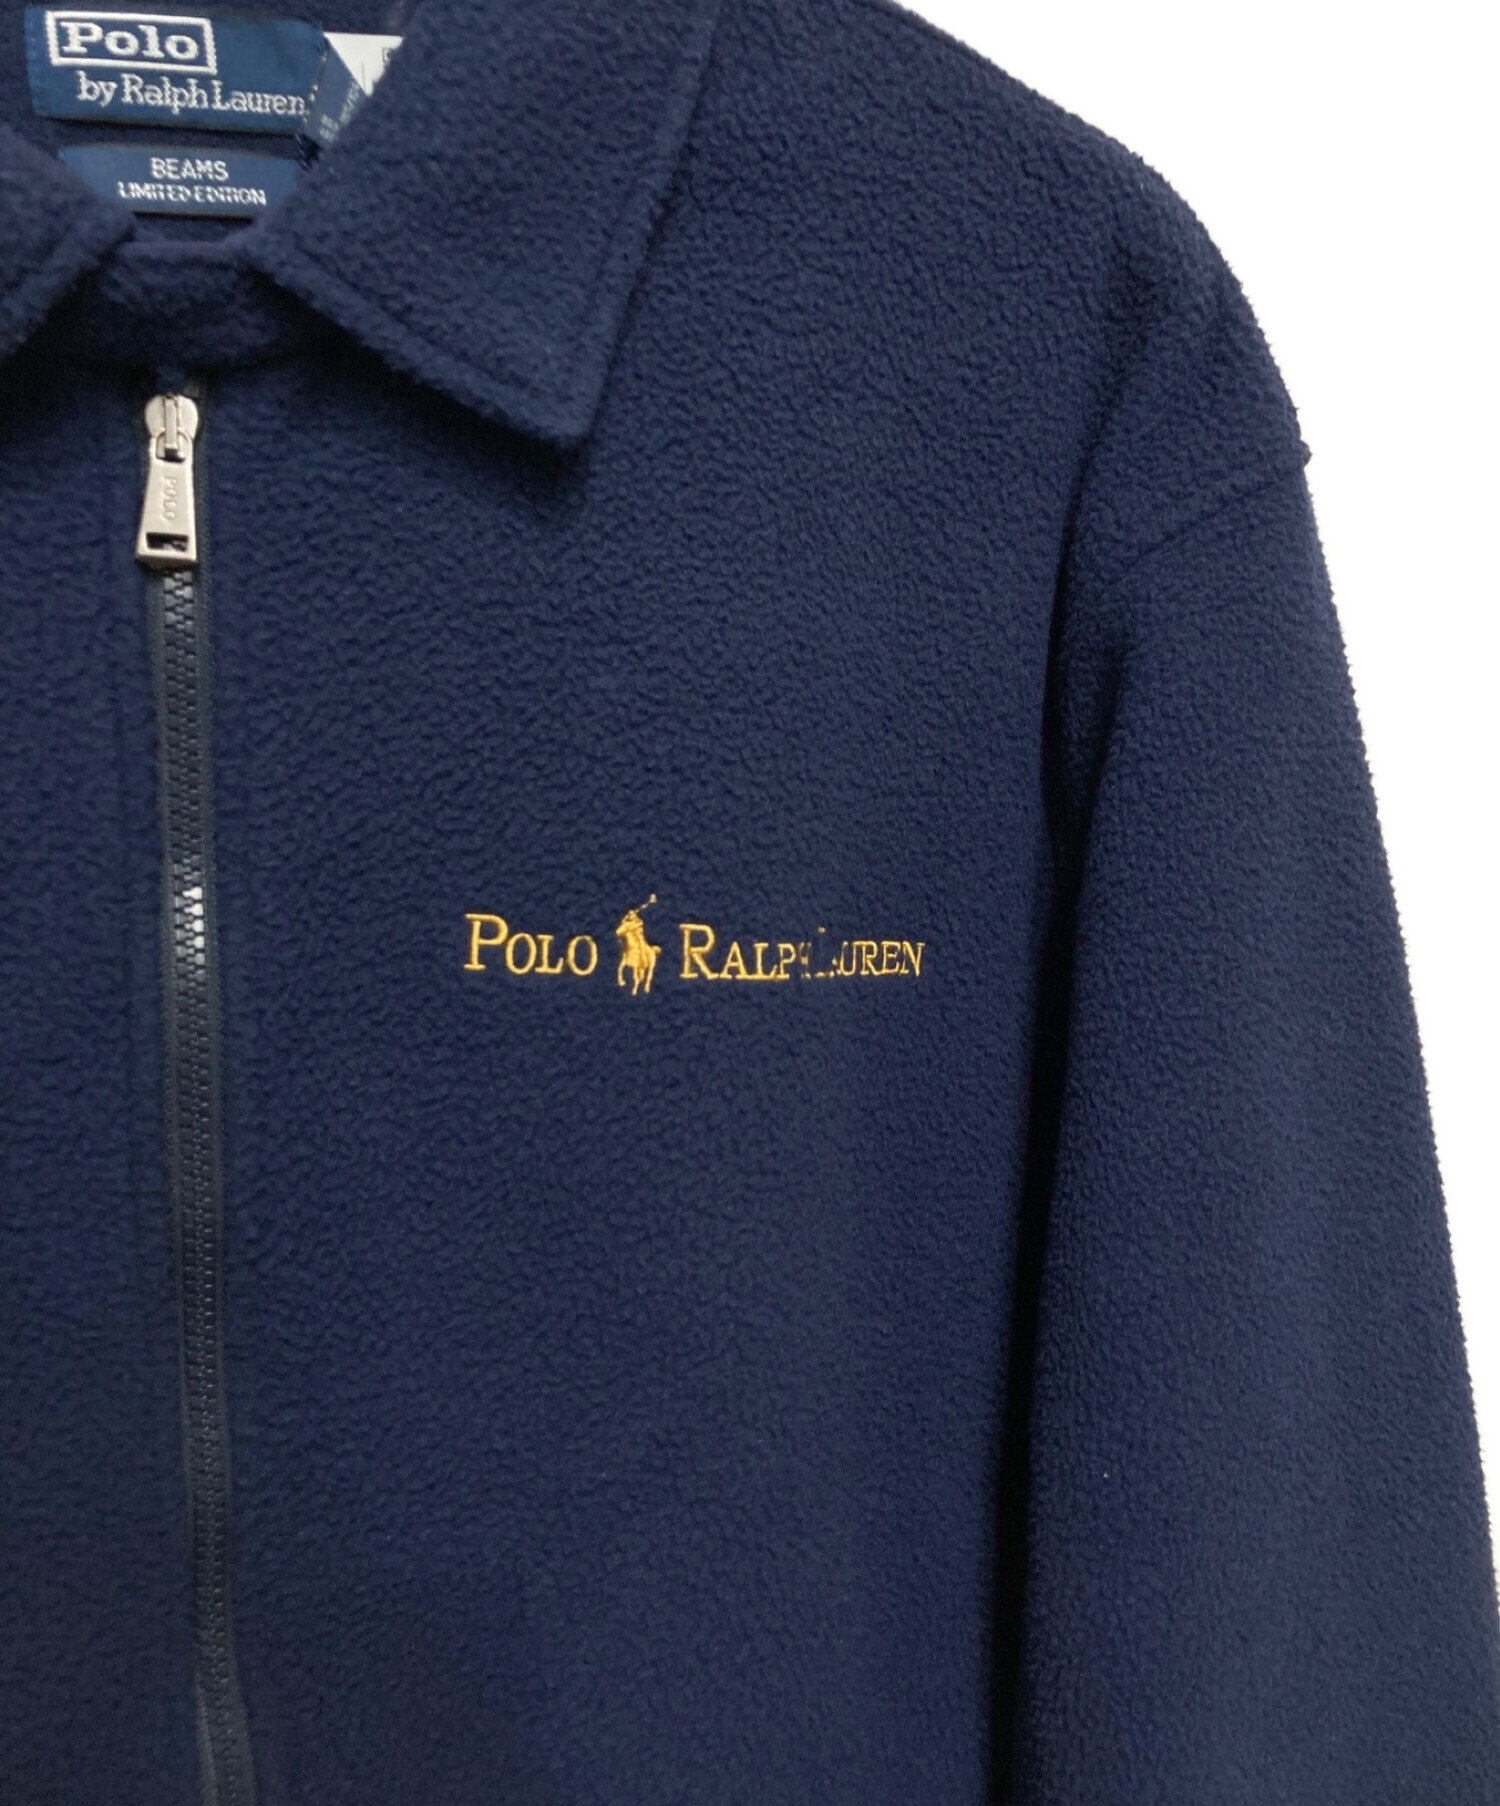 POLO RALPH LAUREN (ポロ・ラルフローレン) BEAMS (ビームス) Navy and Gold Logo Collection  FLEECE JACKET ネイビー サイズ:XL 未使用品